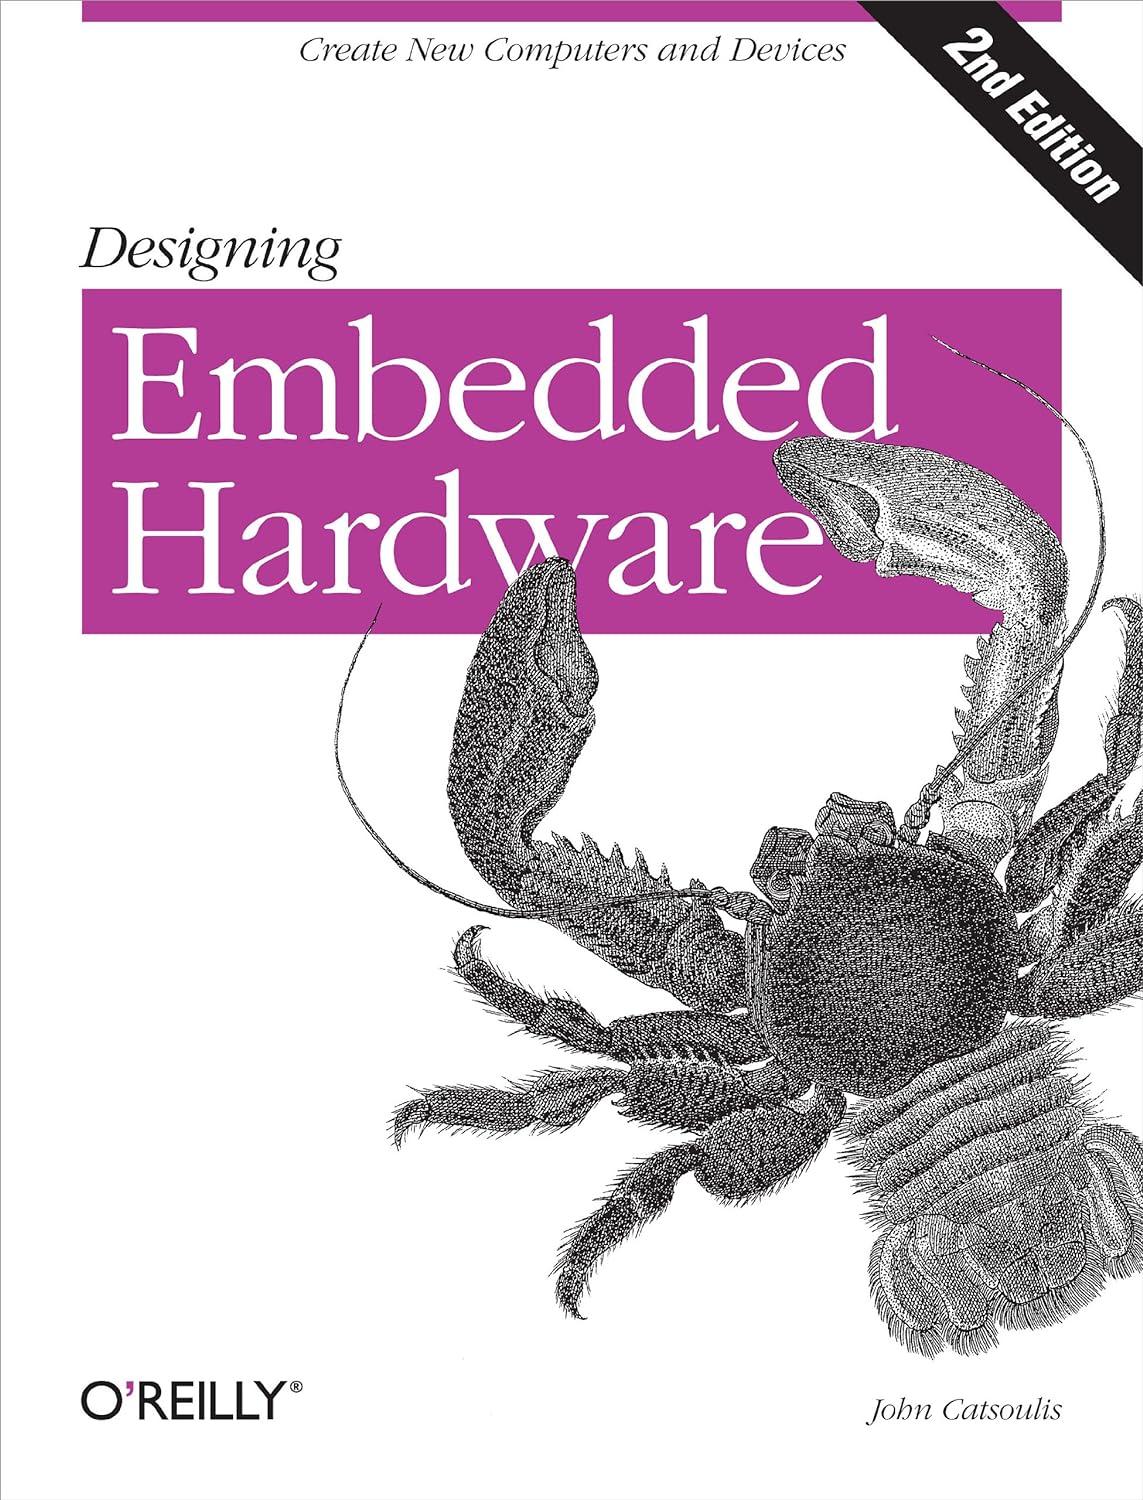 designing embedded hardware 2nd edition john catsoulis 0596007558, 978-0596007553